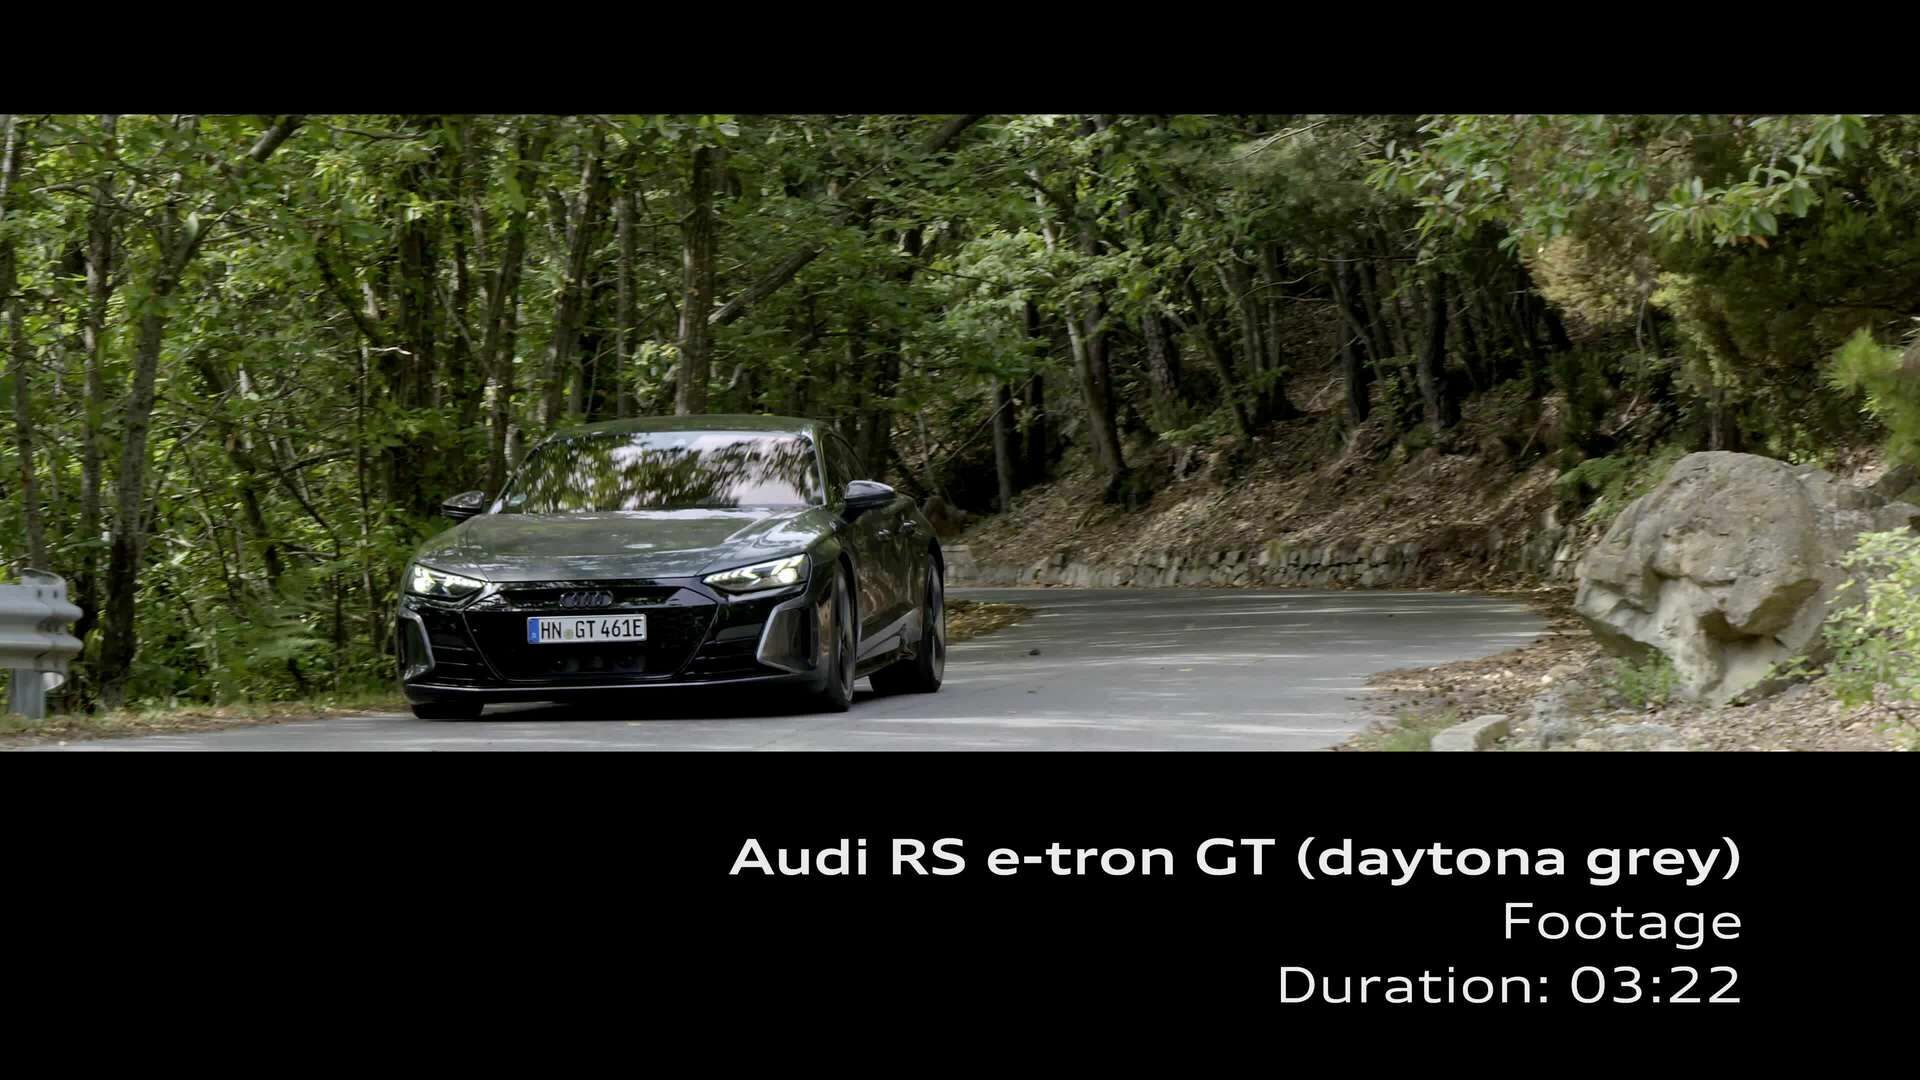 Footage: Audi RS e-tron GT Daytona grey